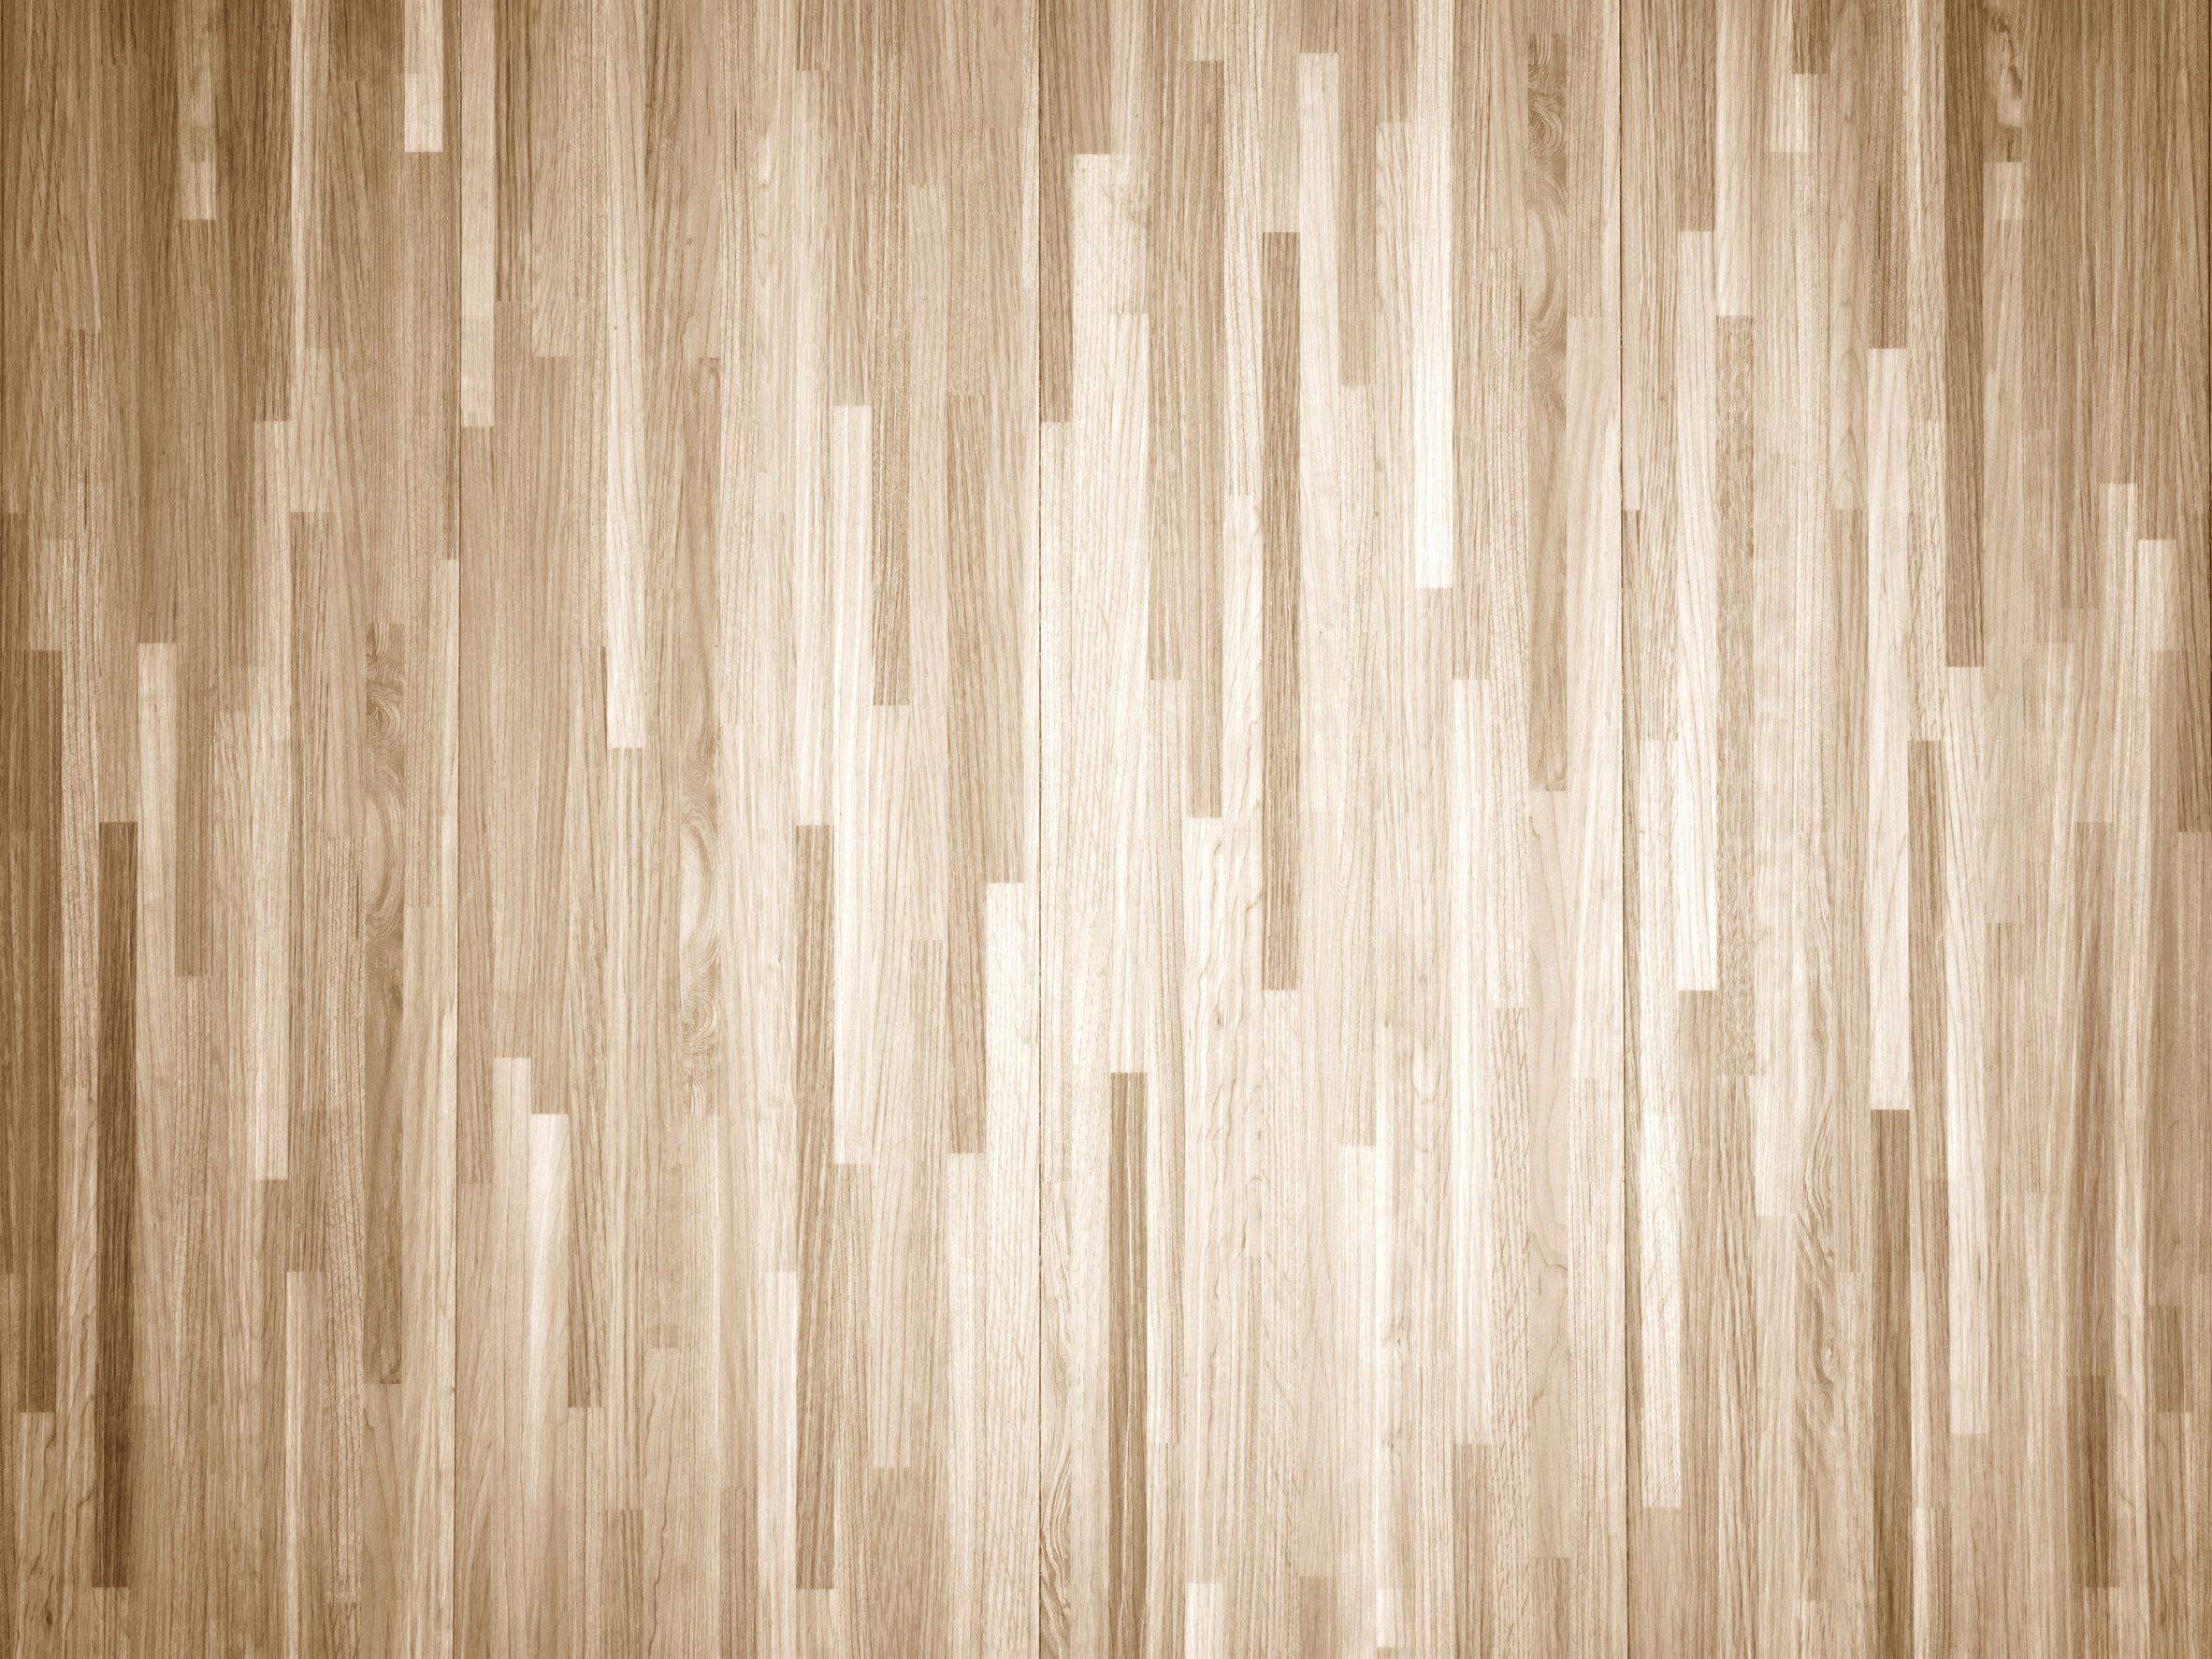 14 attractive Hardwood Floor Refinishing Price Per Sqft 2024 free download hardwood floor refinishing price per sqft of how to chemically strip wood floors woodfloordoctor com in you